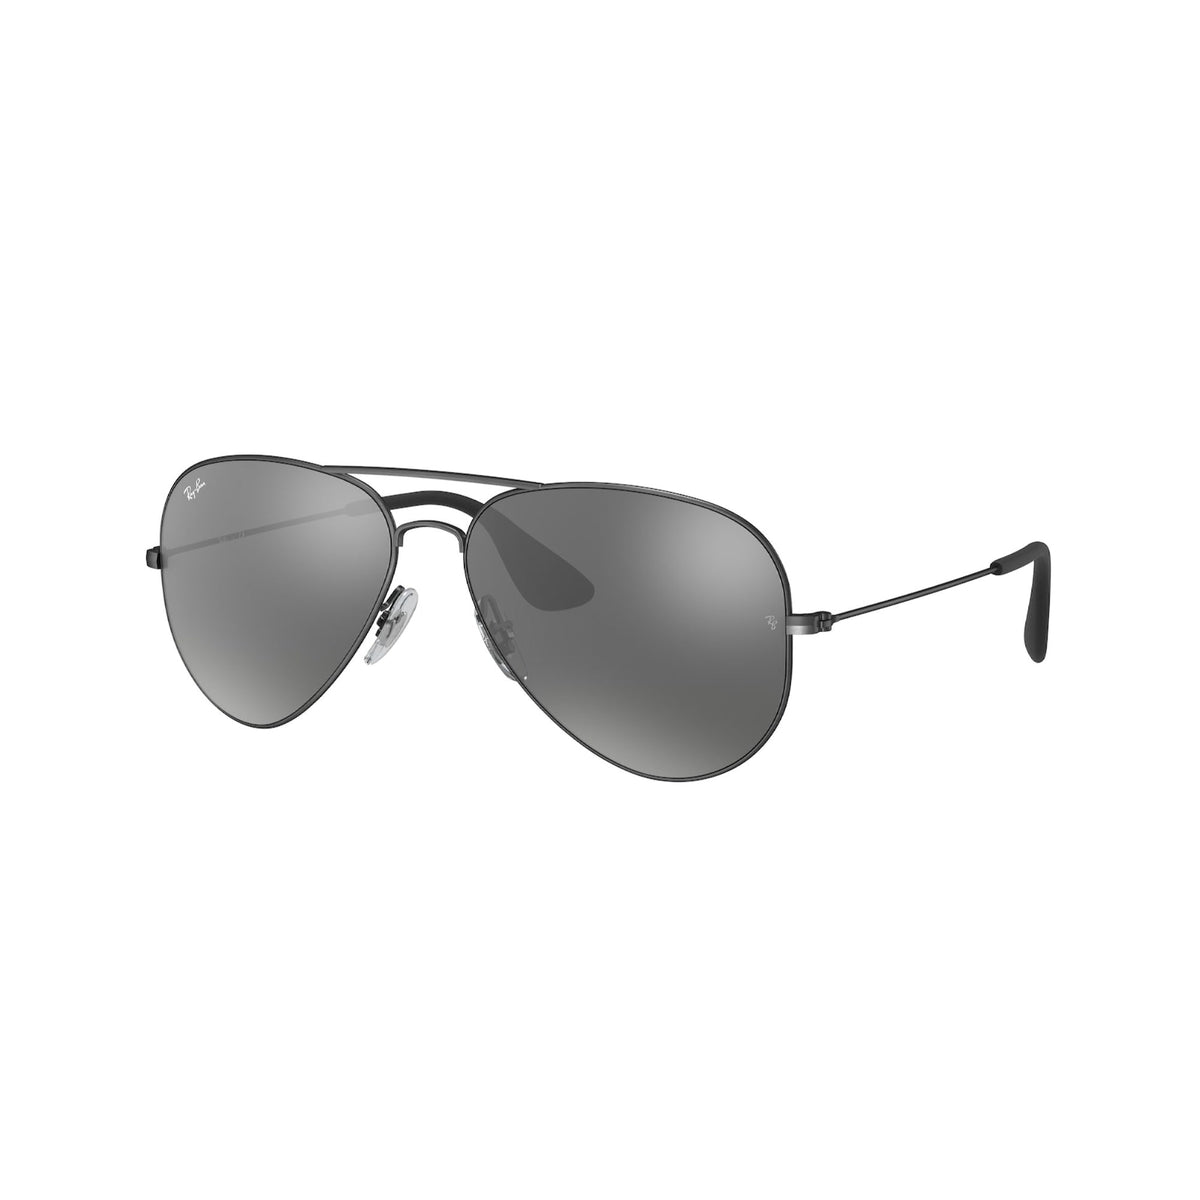 Ray-Ban Unisex Sunglasses  Black Grey Mirror Silver Metal Metal  0RB3558 91396G 58